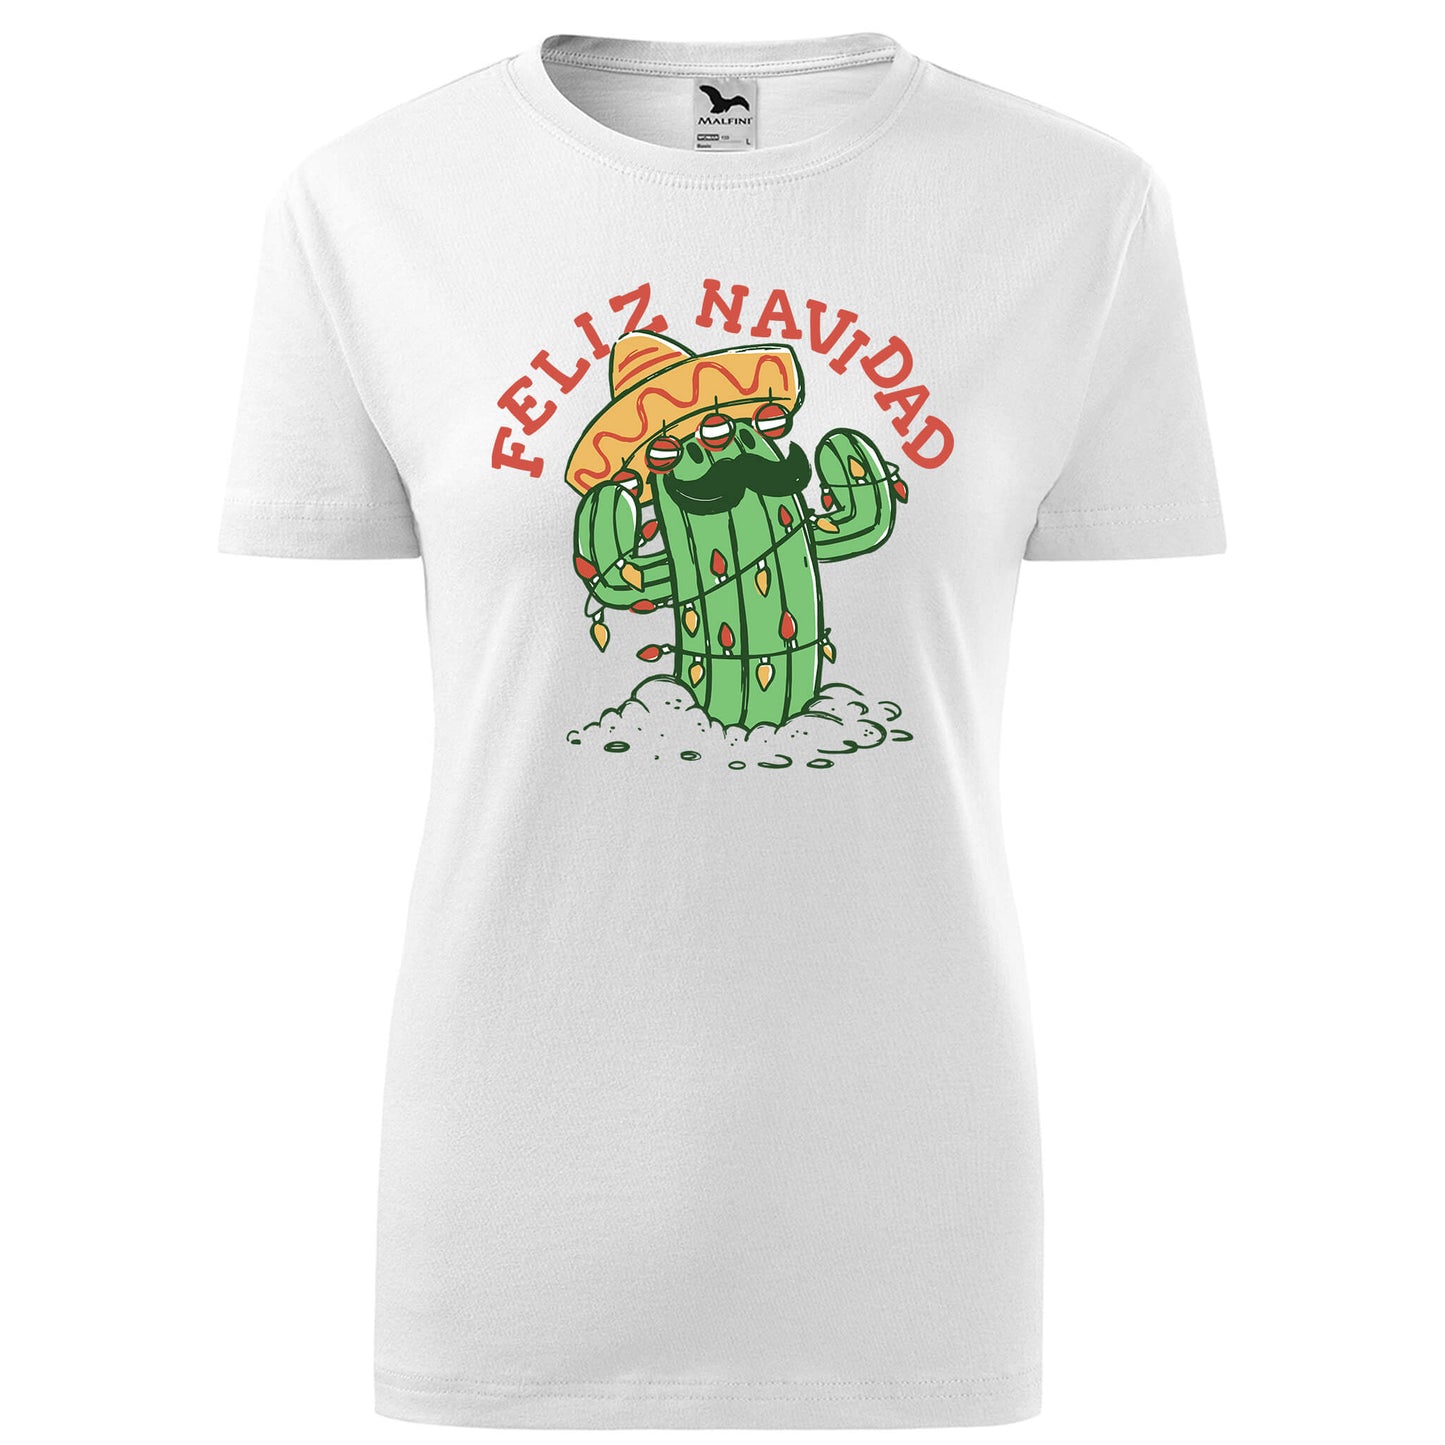 Feliz navidad cactus t-shirt - rvdesignprint